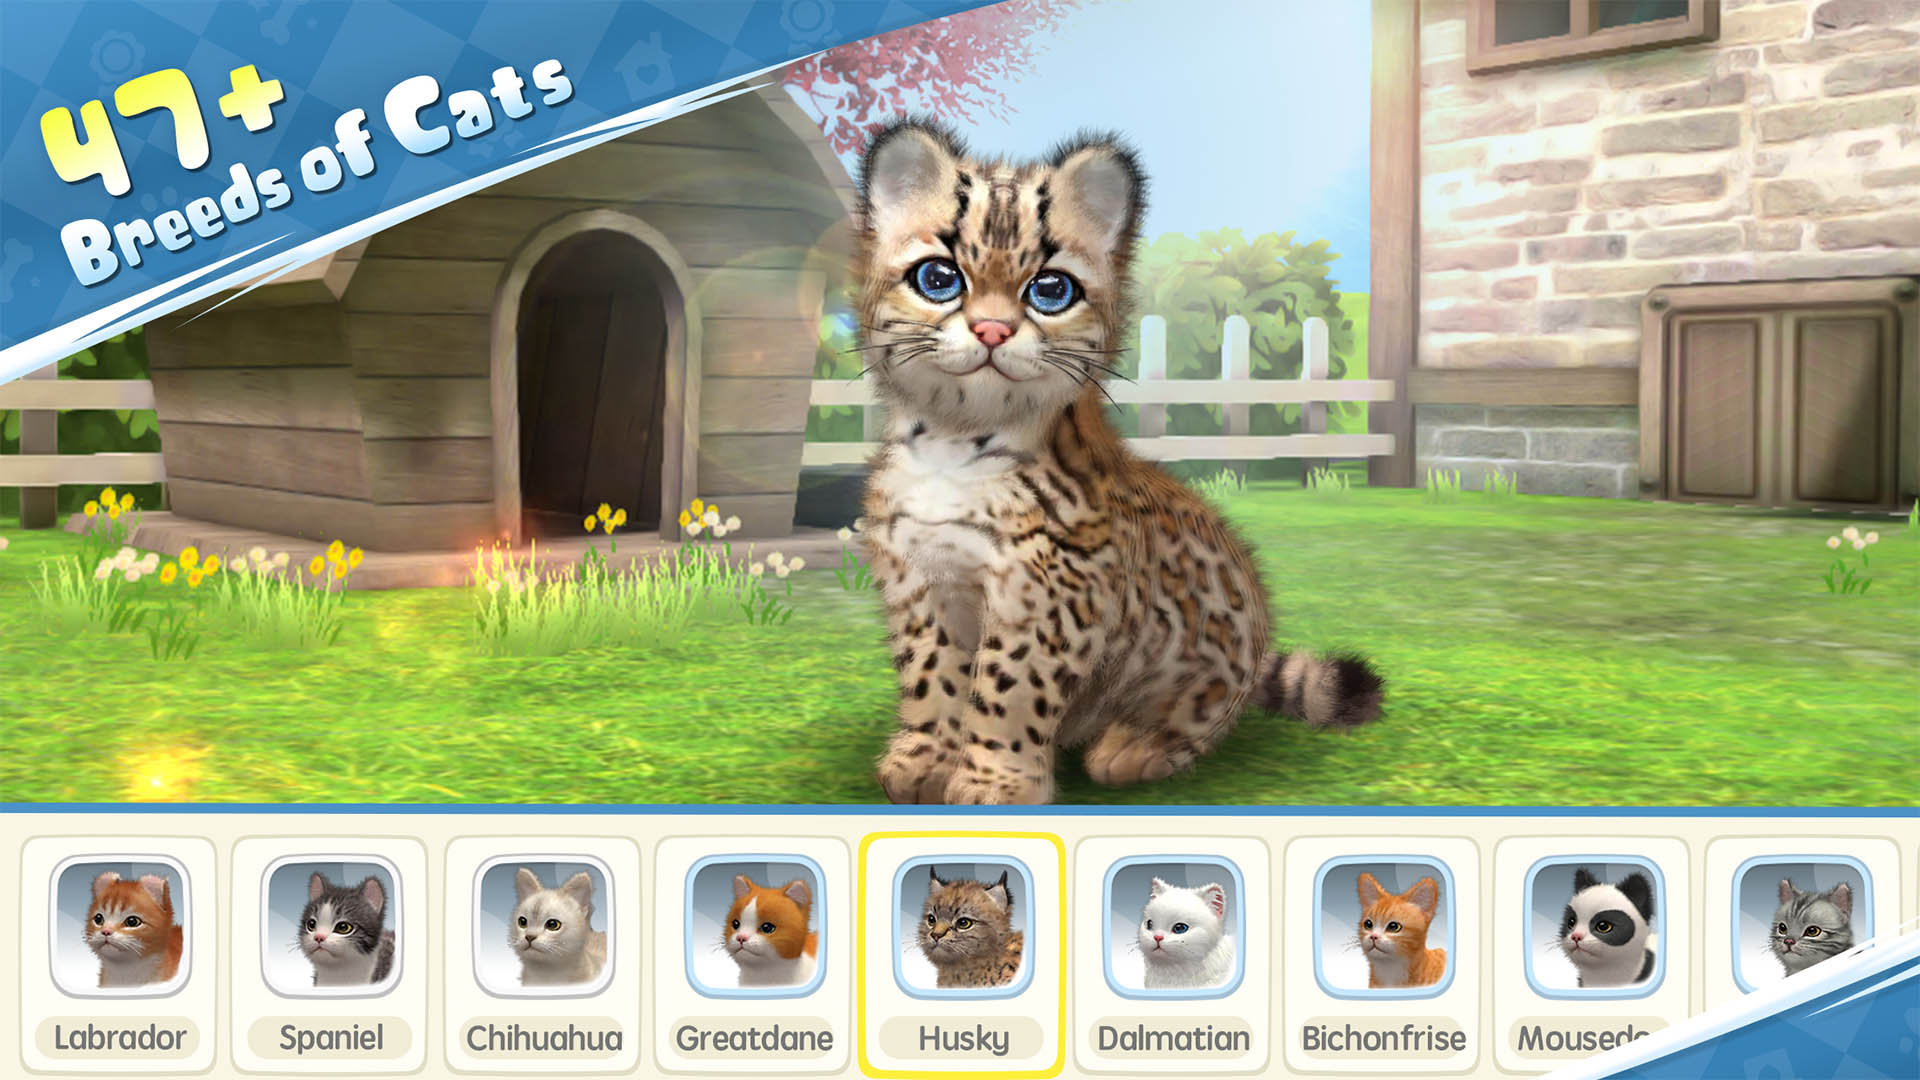 My Cat screenshot 2022